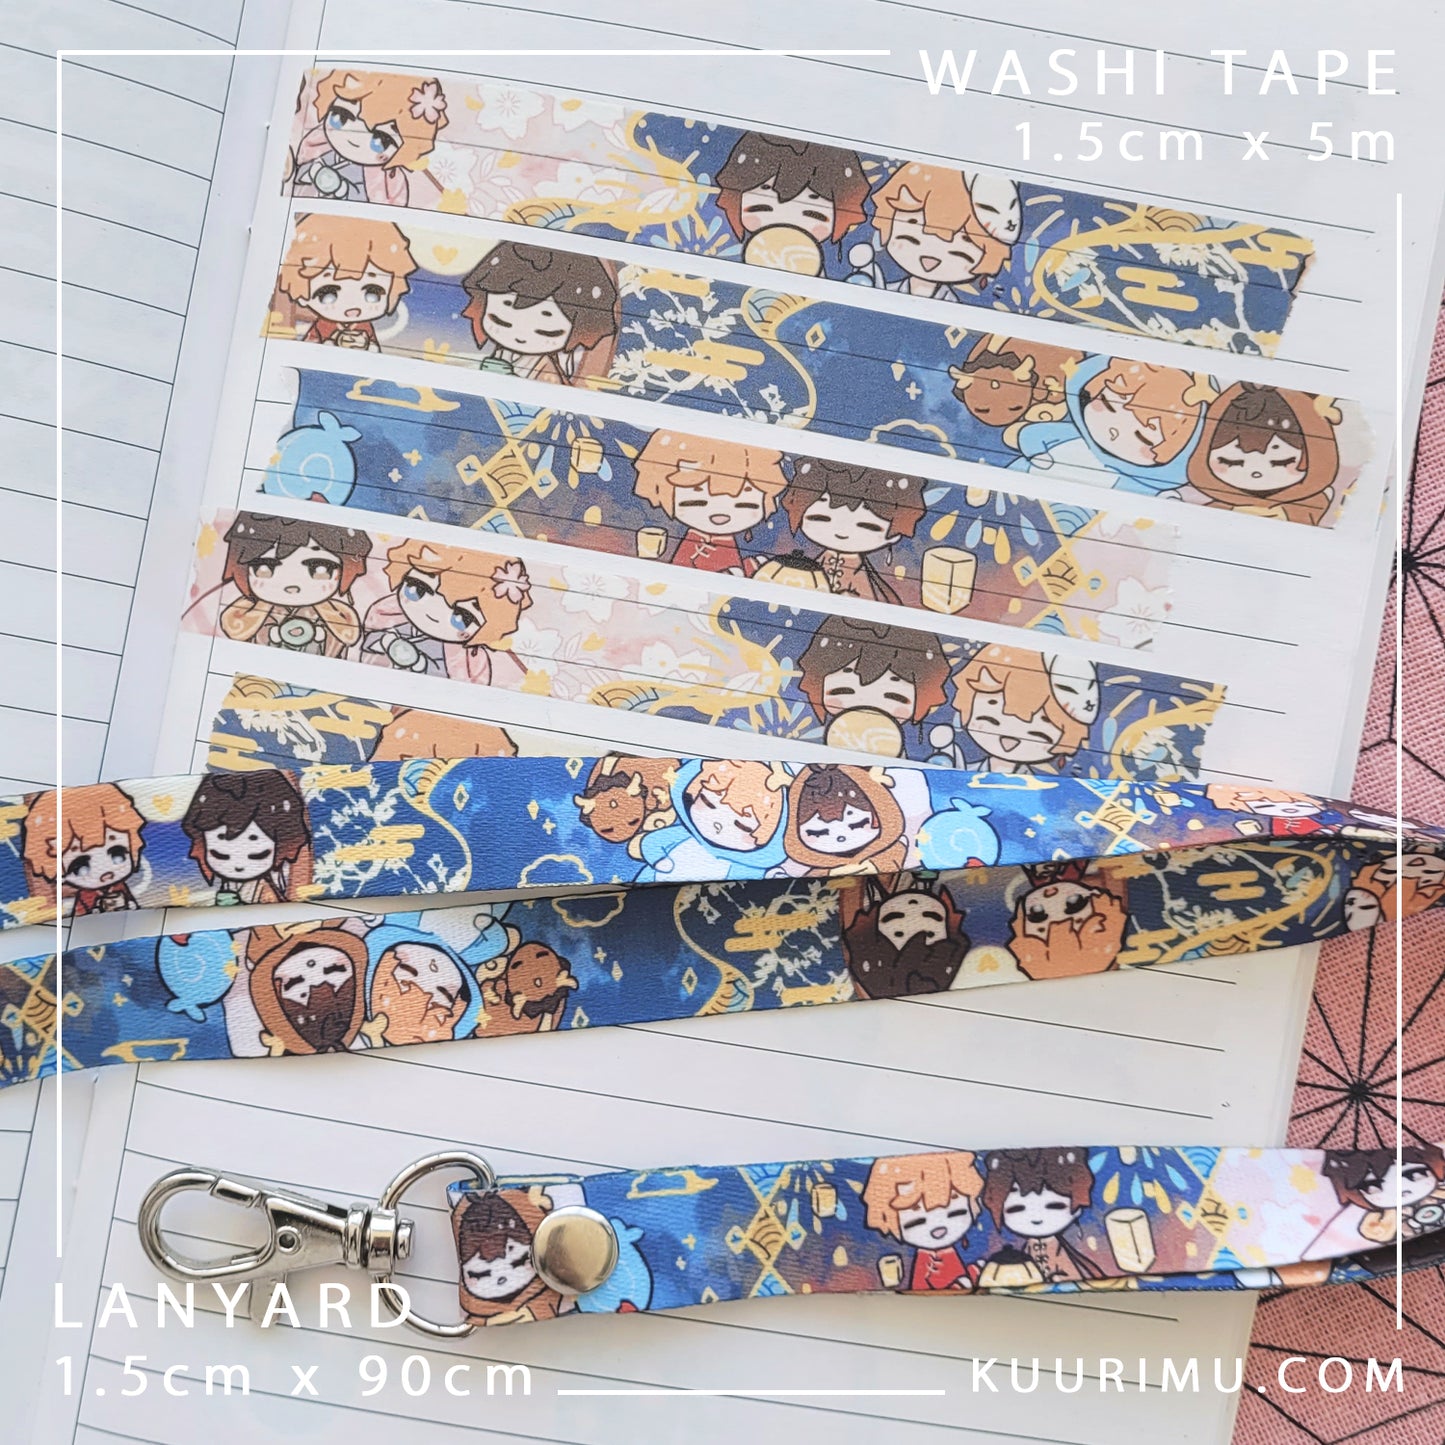 Lanyard and Washi Tape